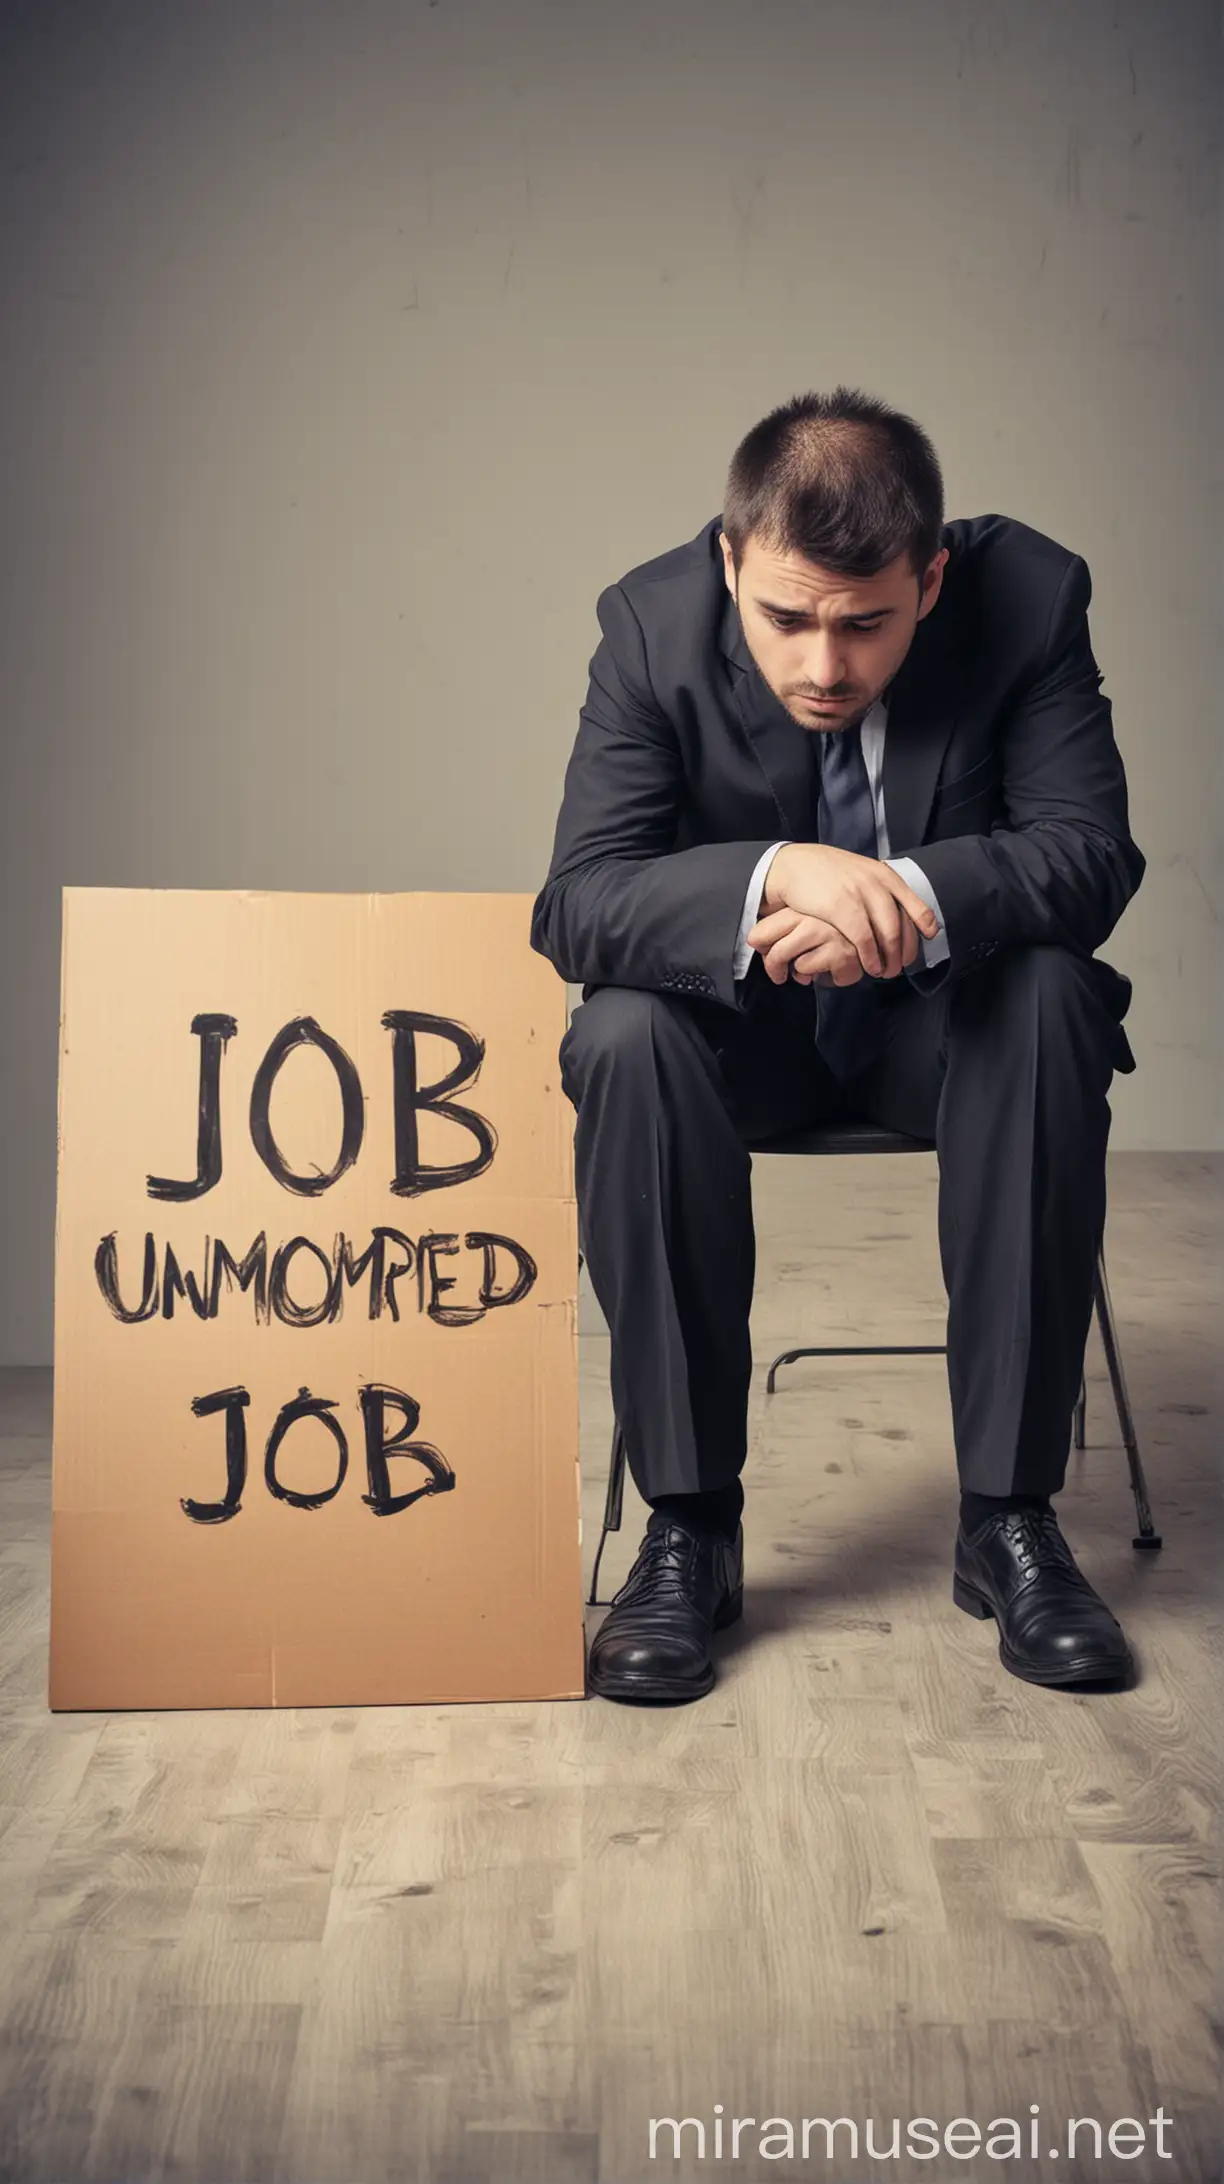 Depressed Unemployed Man Seeking Job Opportunities